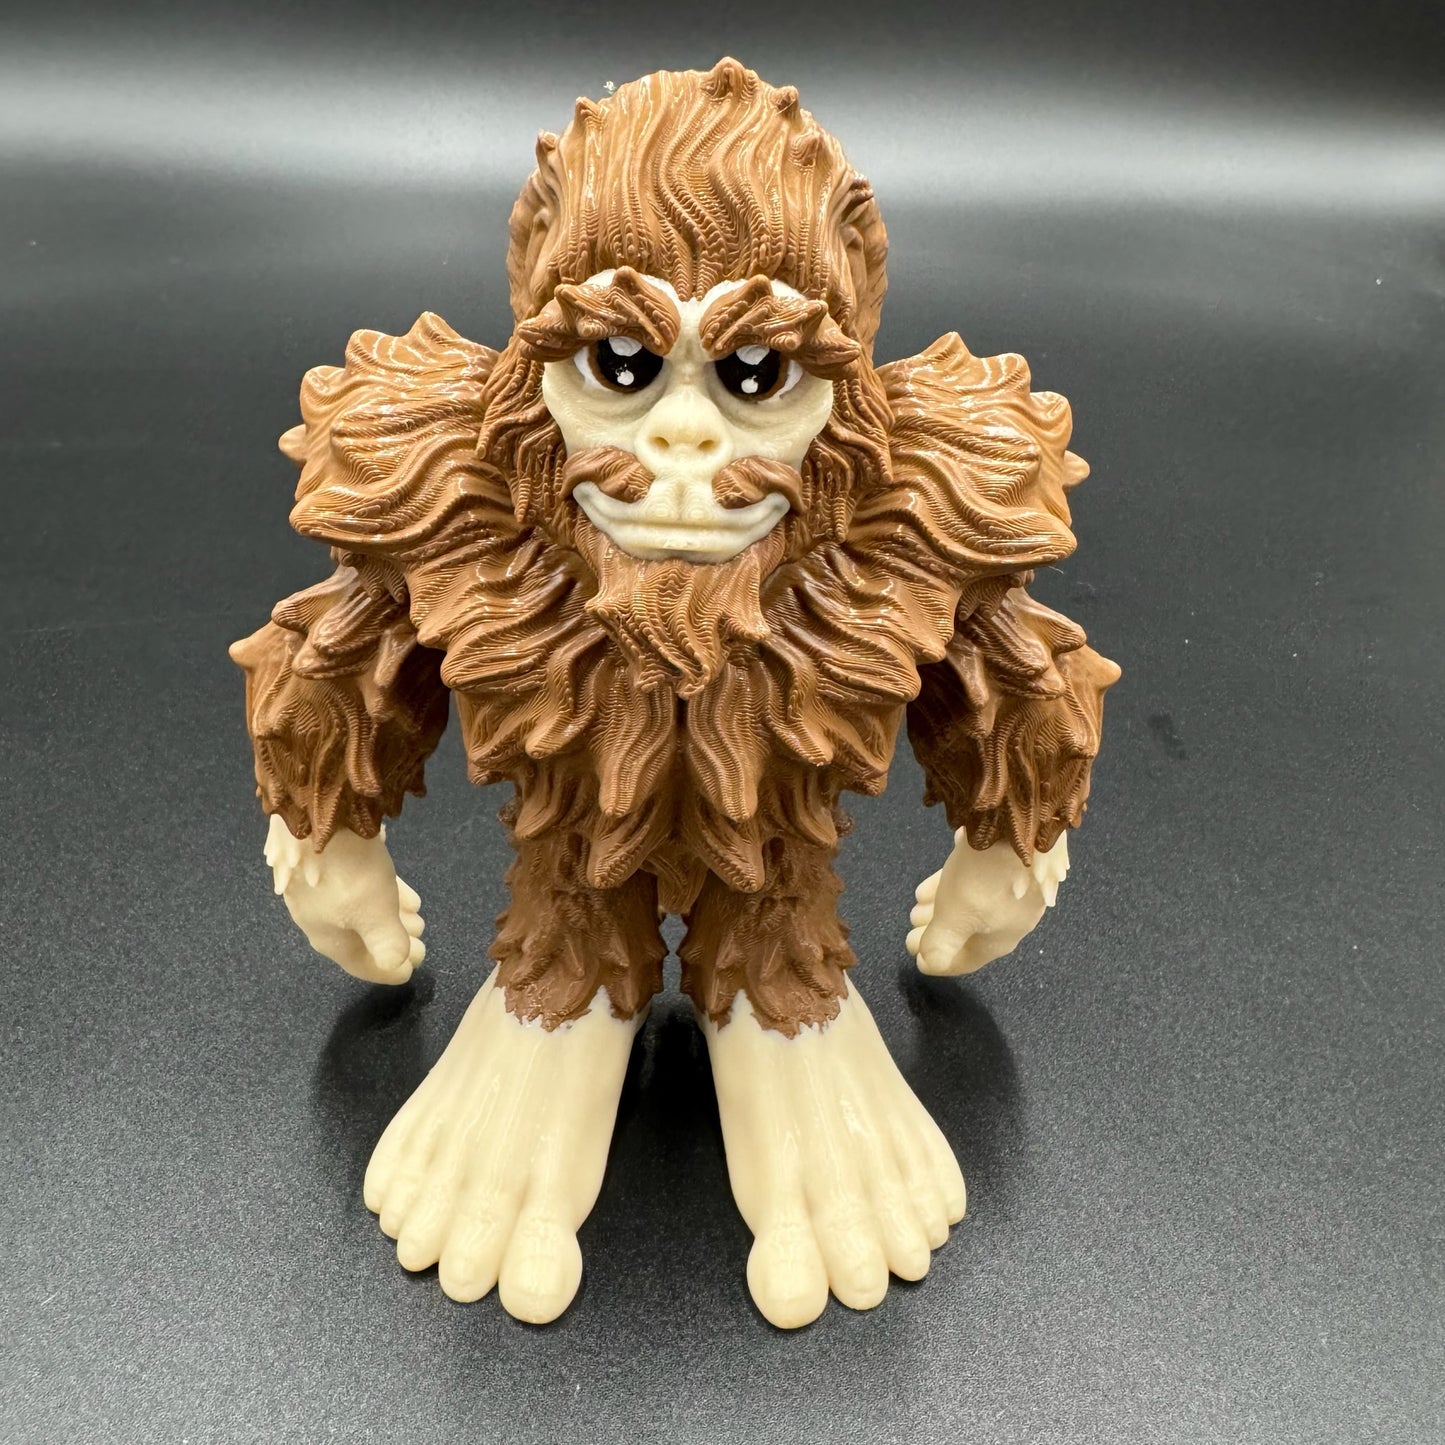 3D Printed Bigfoot & Abominable Snowman